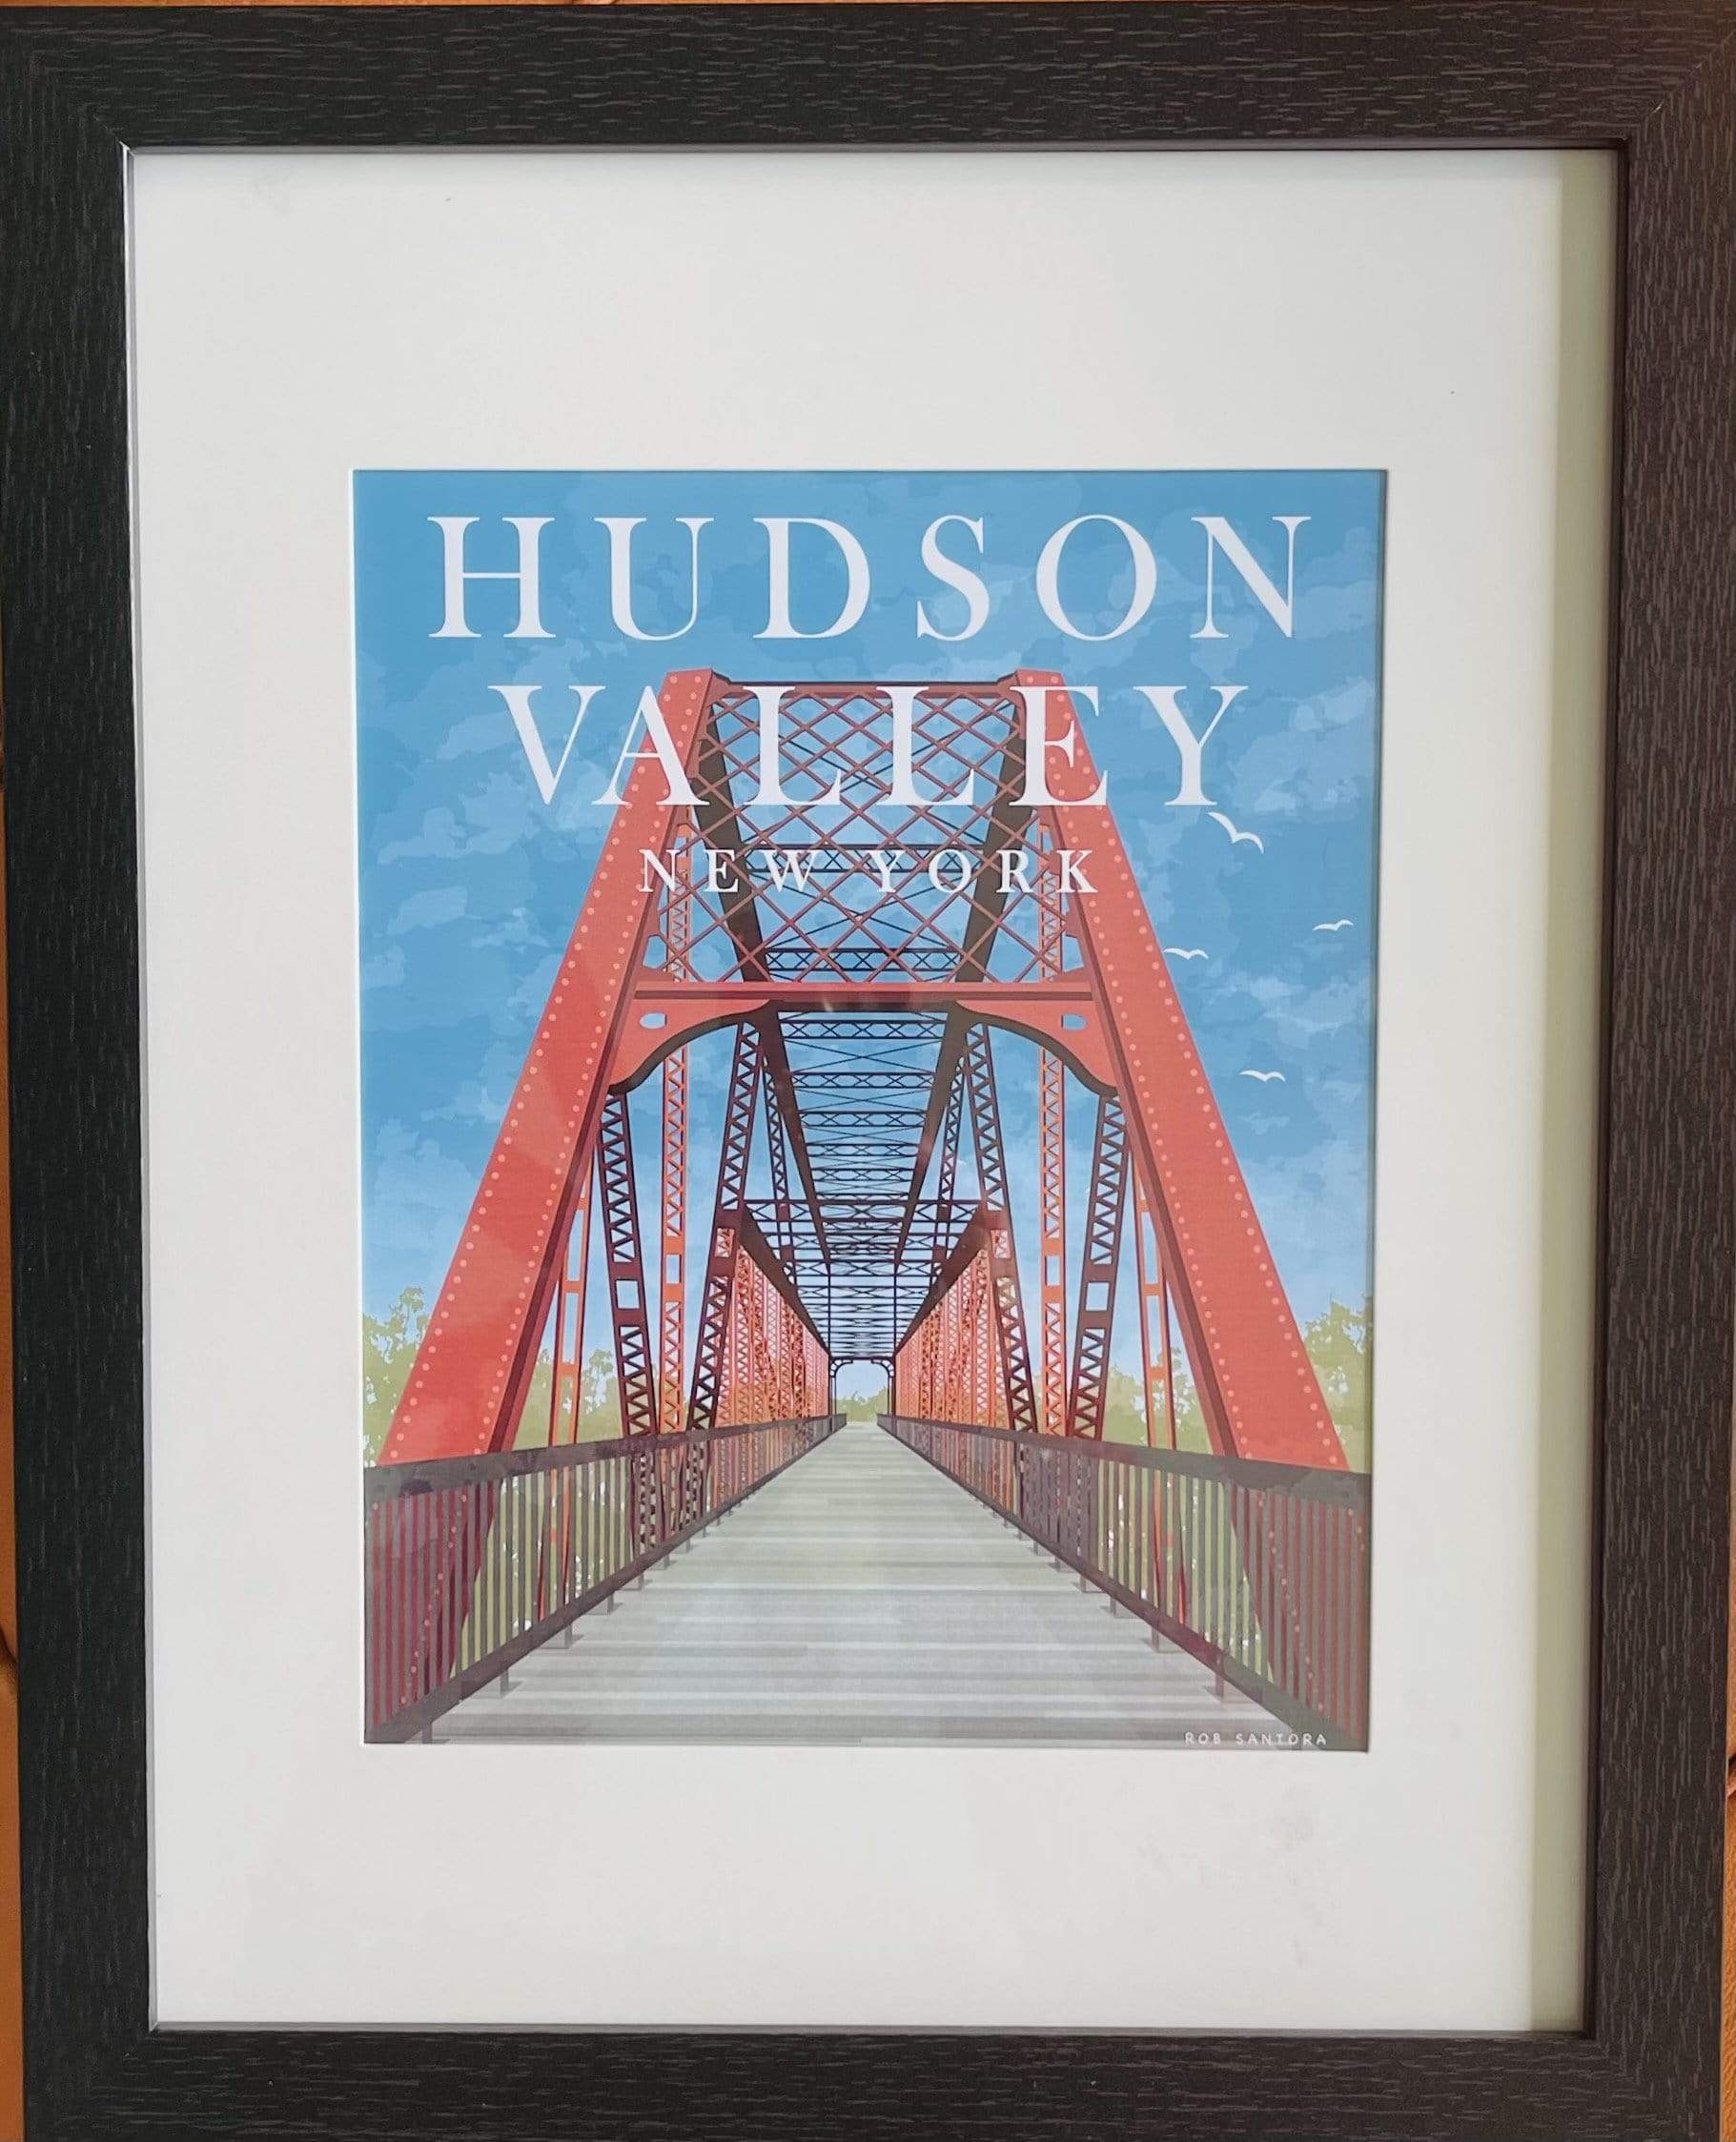 Hudson Valley/Bridge "Architectural Landmarks" - Framed Print - PORCH